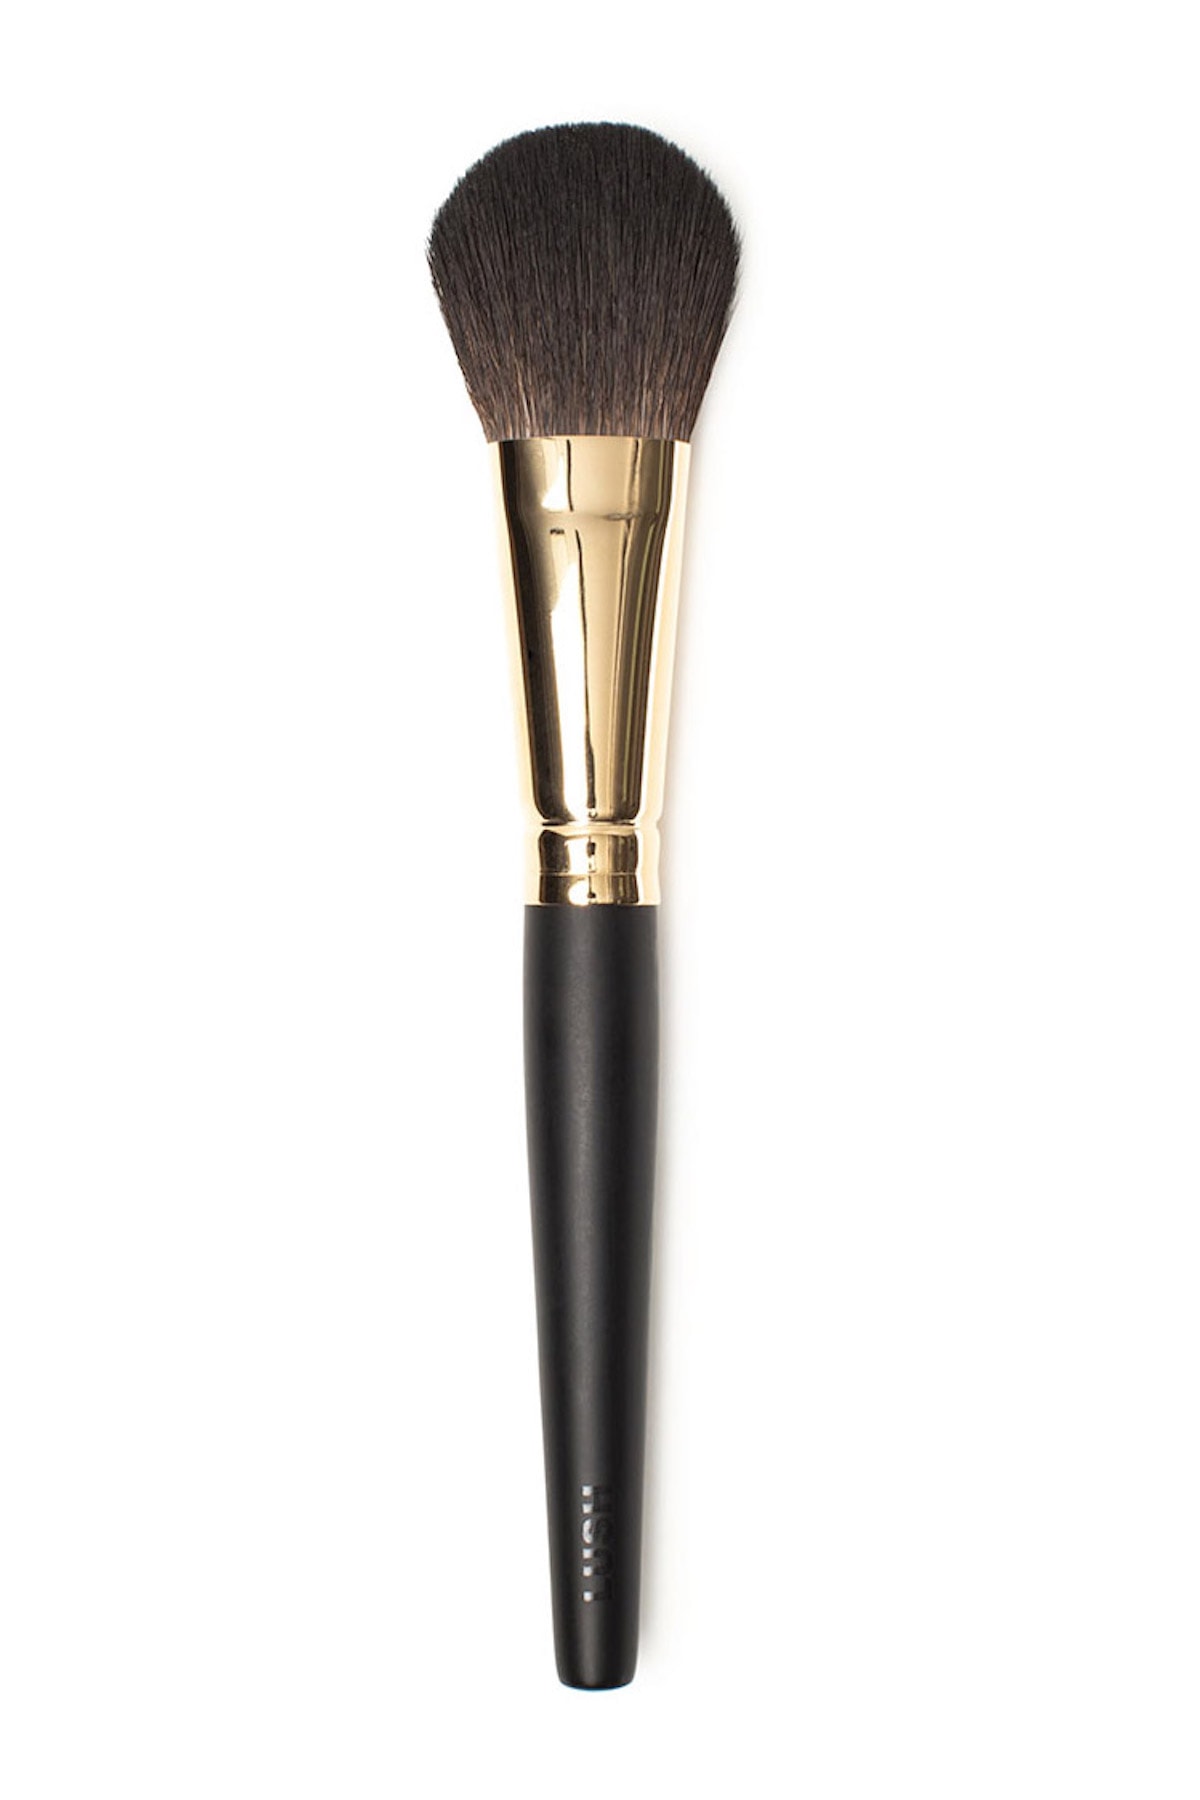 LUSH Vegan Cruelty-Free Makeup Brush Collection Handmade Tools Beauty Blush Bronzer Eyebrow Product